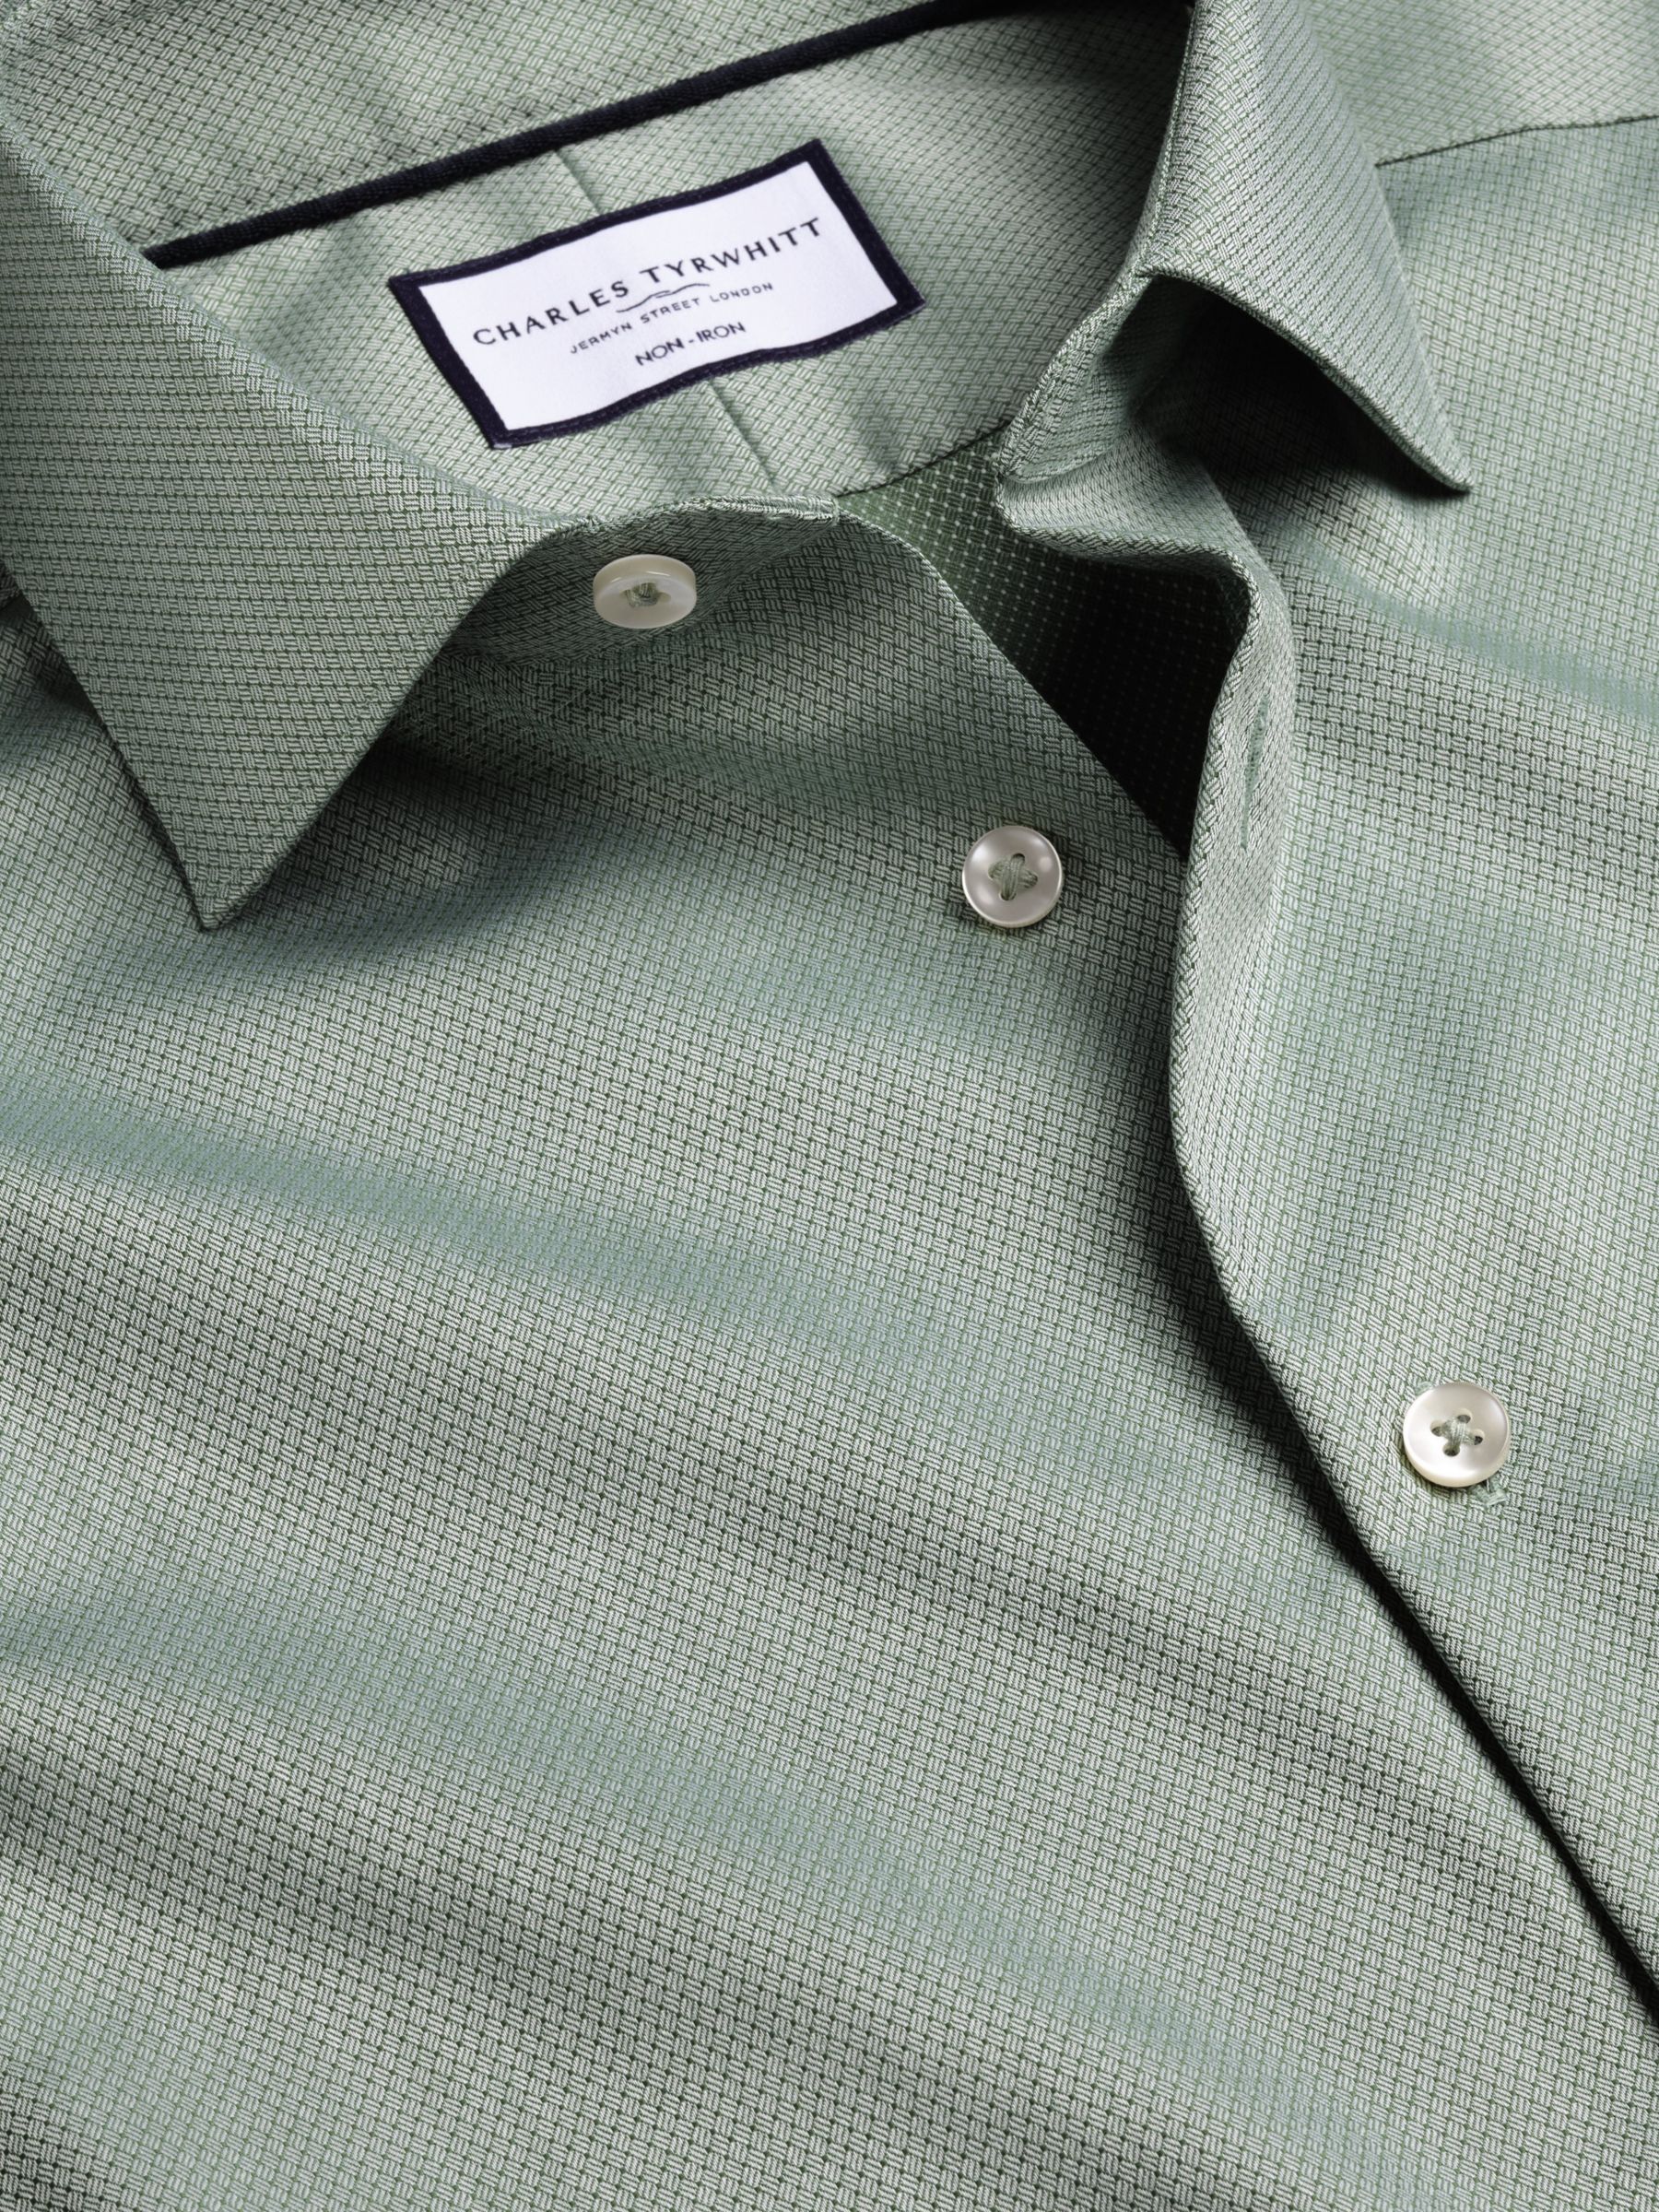 Charles Tyrwhitt Non-Iron Stretch Semi Plain Textured Shirt, Light Green, 15 33